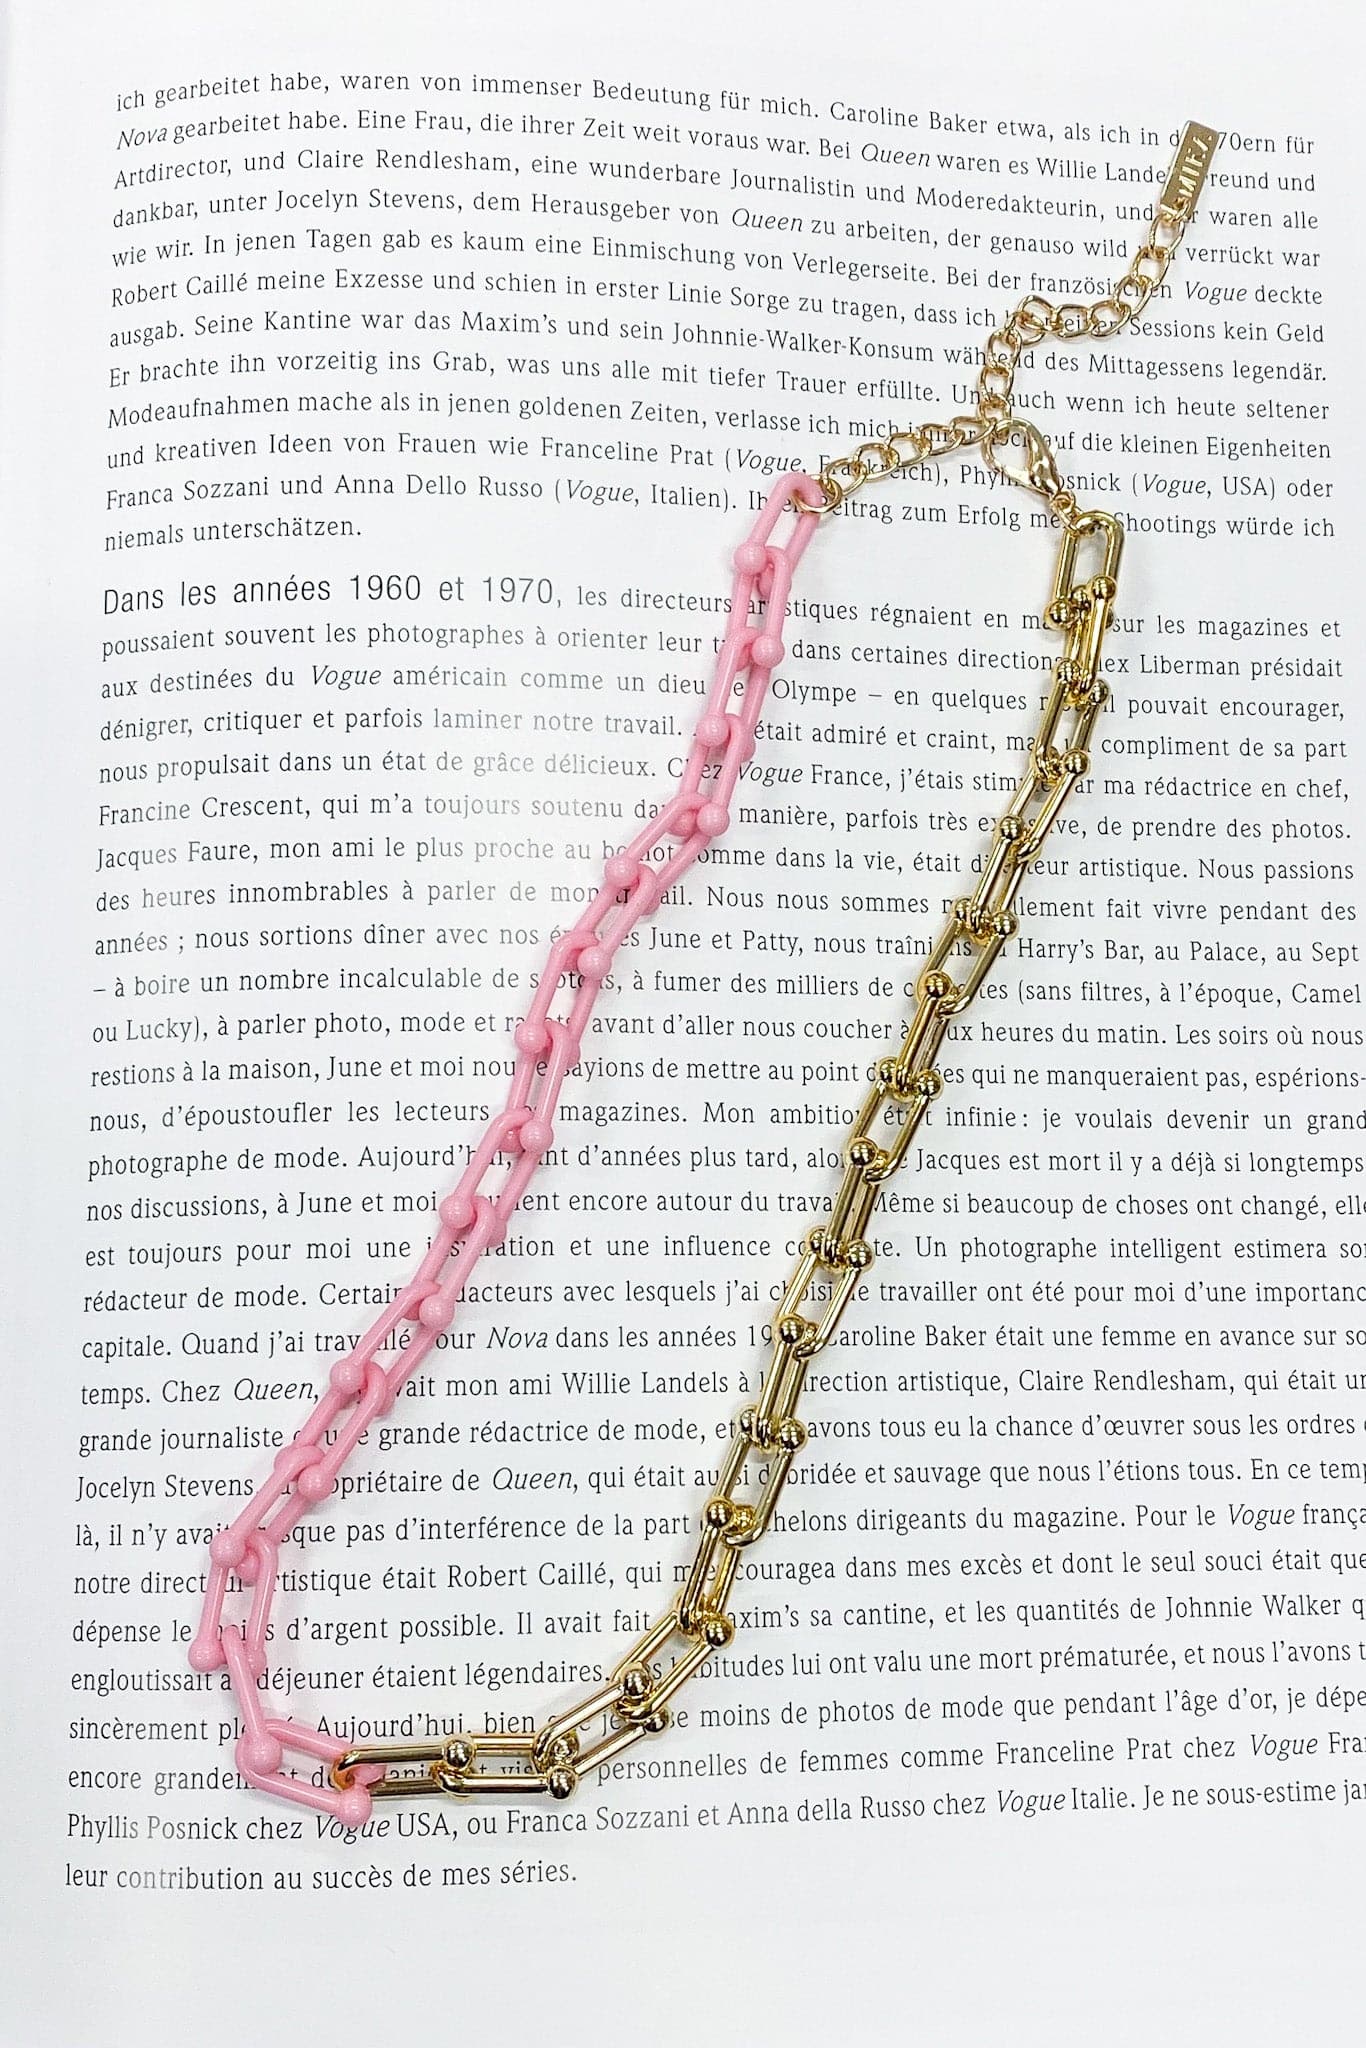 Pink Noelia Acrylic Color Chain Necklace - FINAL SALE - kitchencabinetmagic